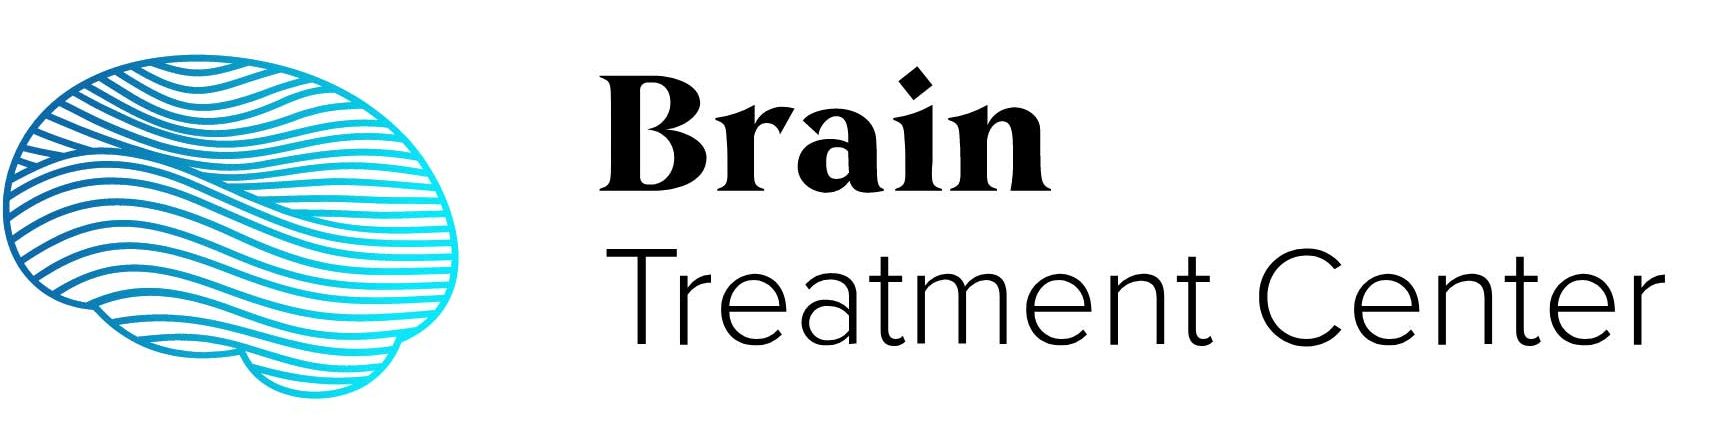 Brain Treatment Center Newport Beach